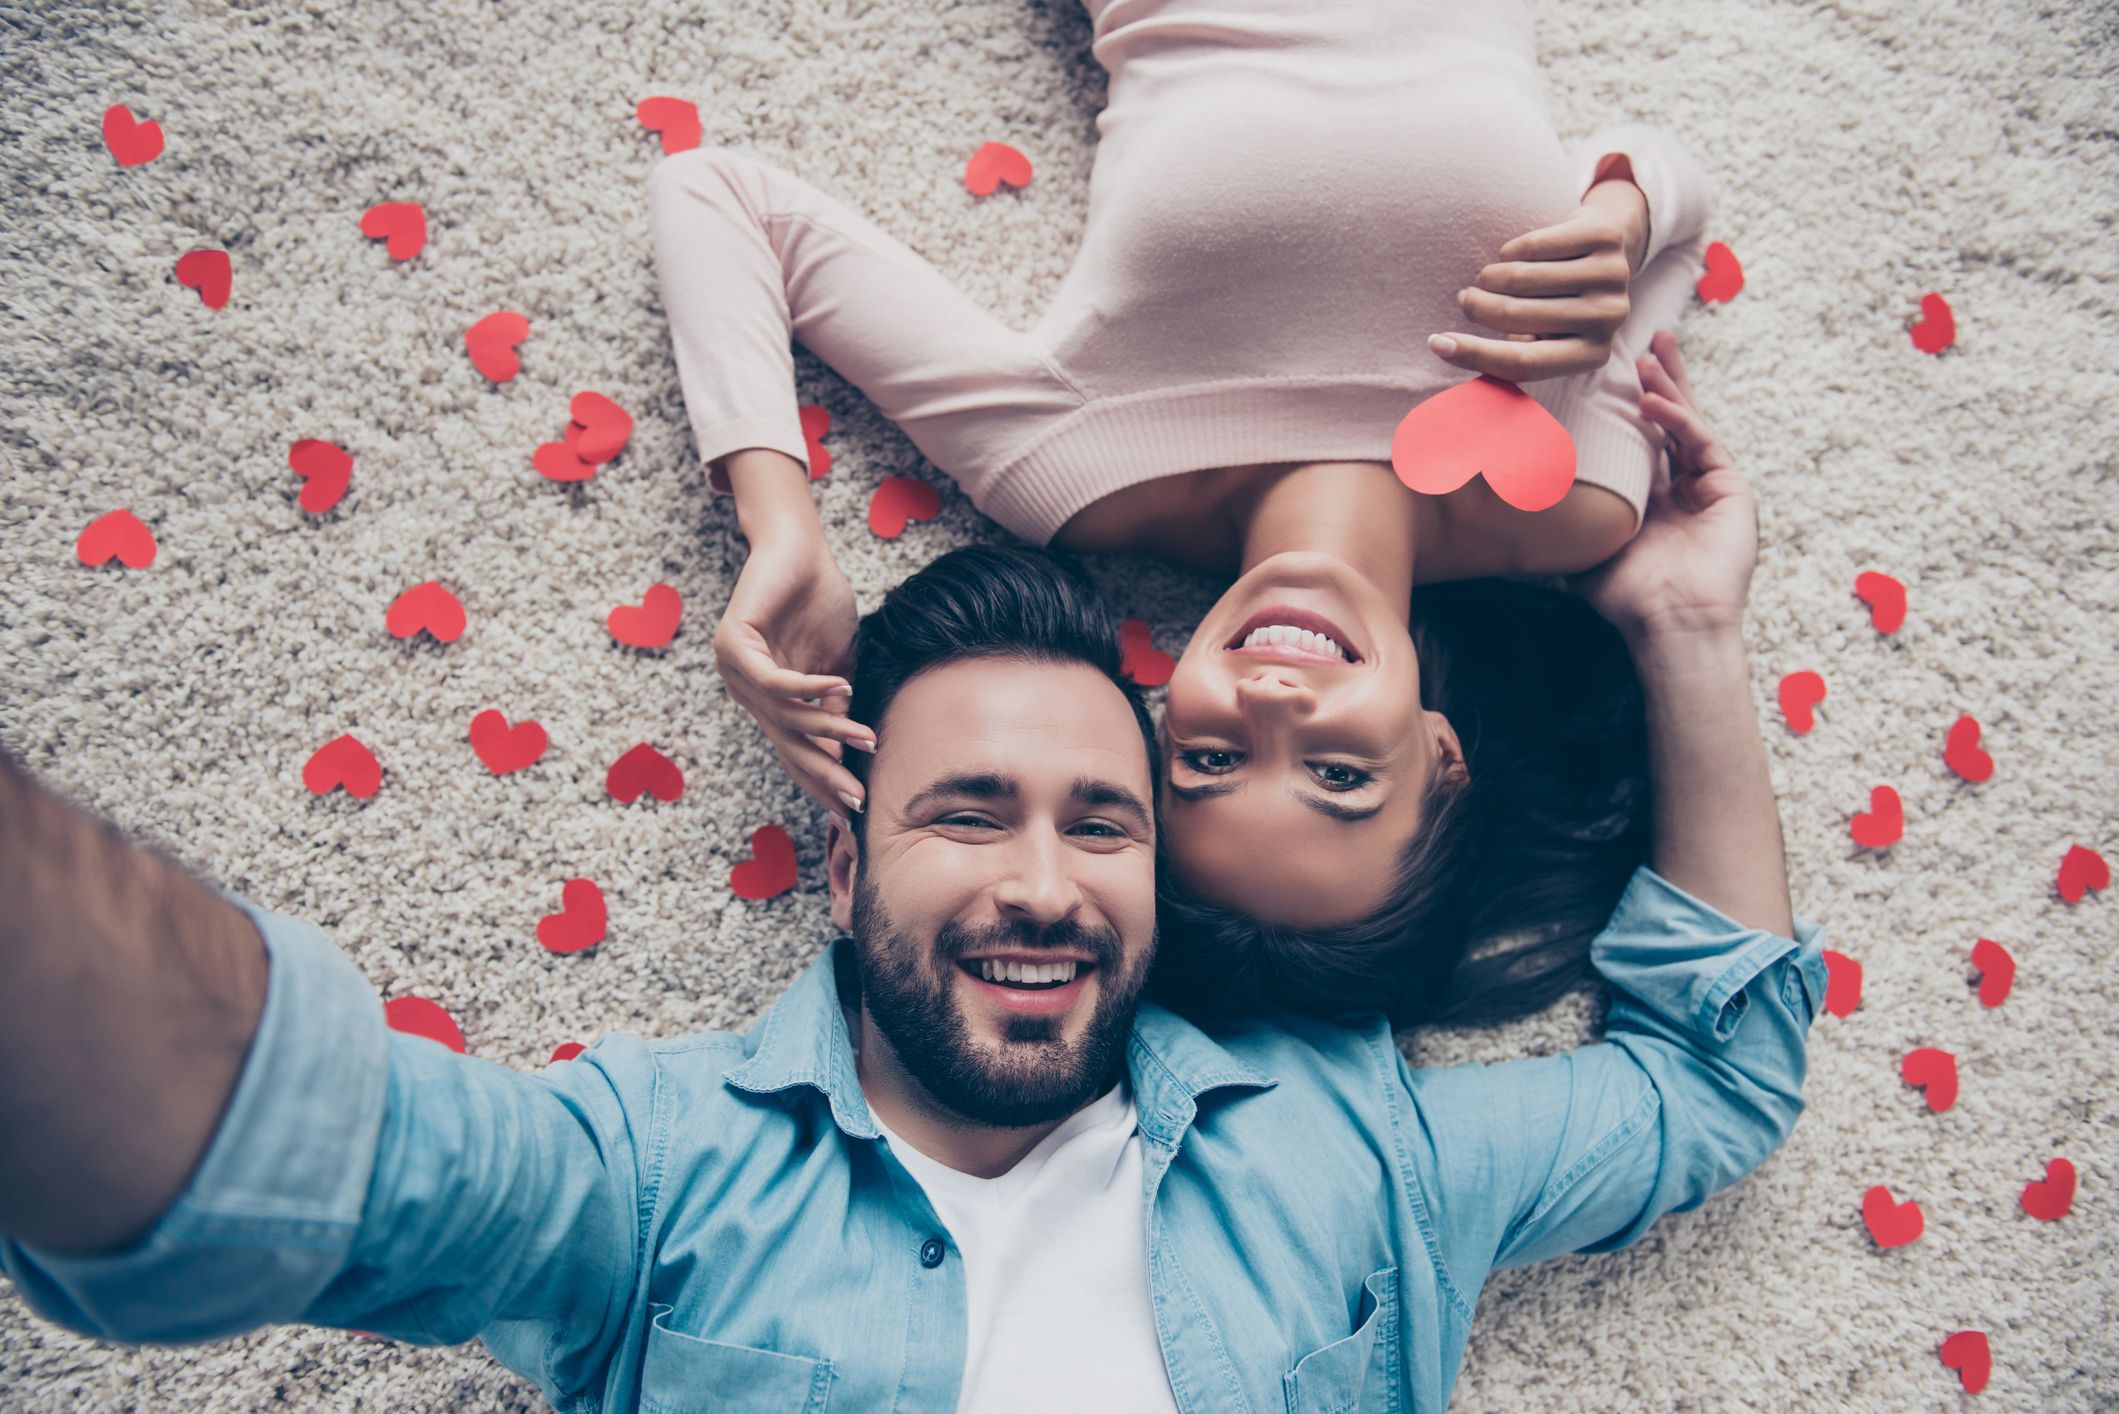 16 Sweet Couple Photoshoot Ideas to Show Off Your Bond | LoveToKnow